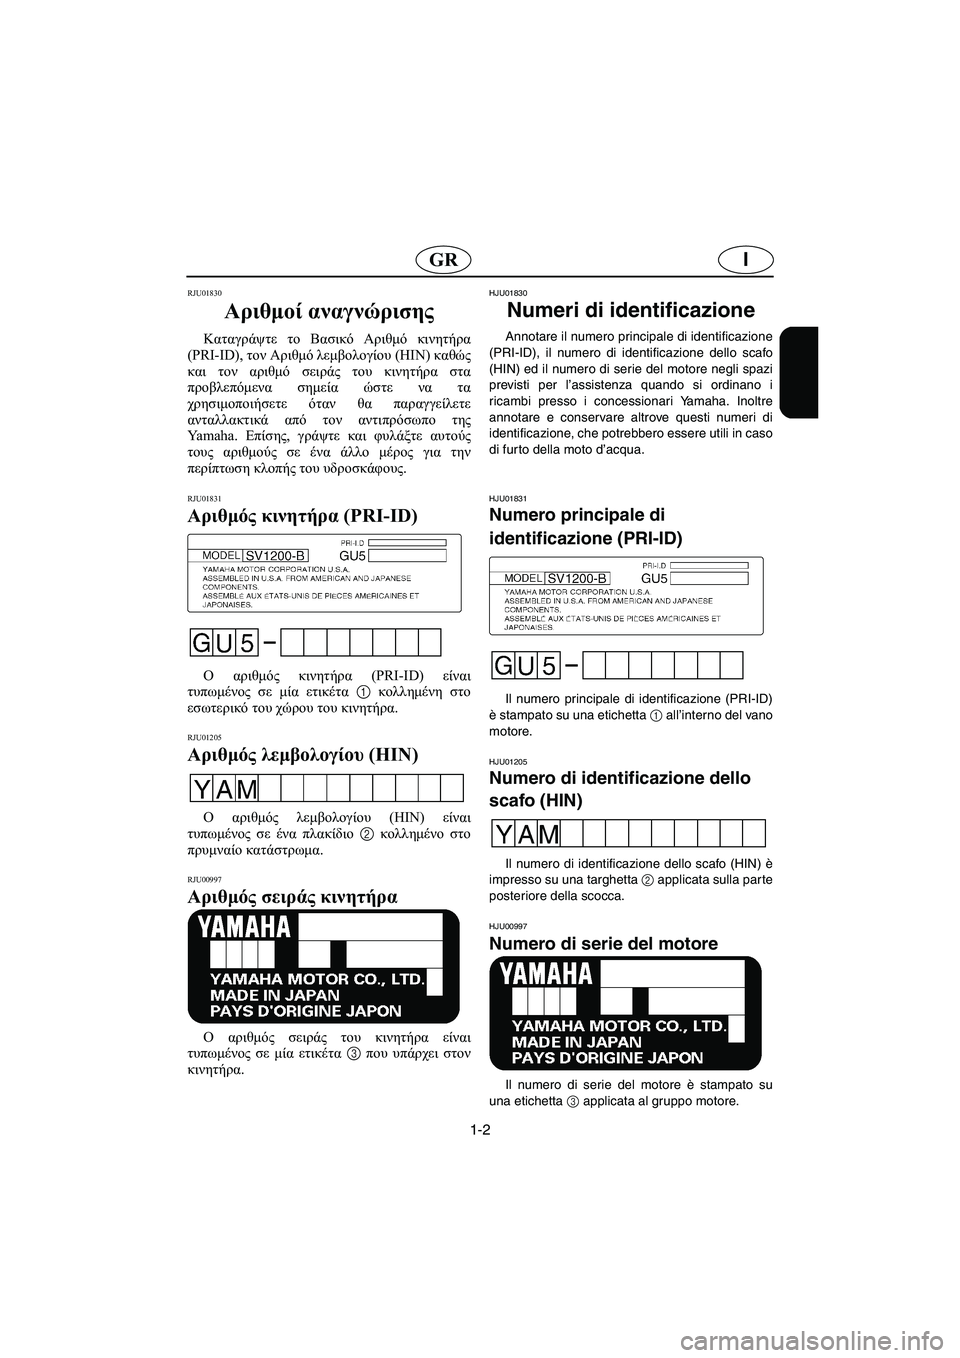 YAMAHA SUV 1200 2003  Manual de utilização (in Portuguese) 1-2
IGR
RJU01830 
Αριθμοί αναγνώρισης  
Καταγράψτε το Βασικό Αριθμό κινητήρα
(PRI-ID), τον Αριθμό λεμβολογίου (HIN) καθώς
κ�